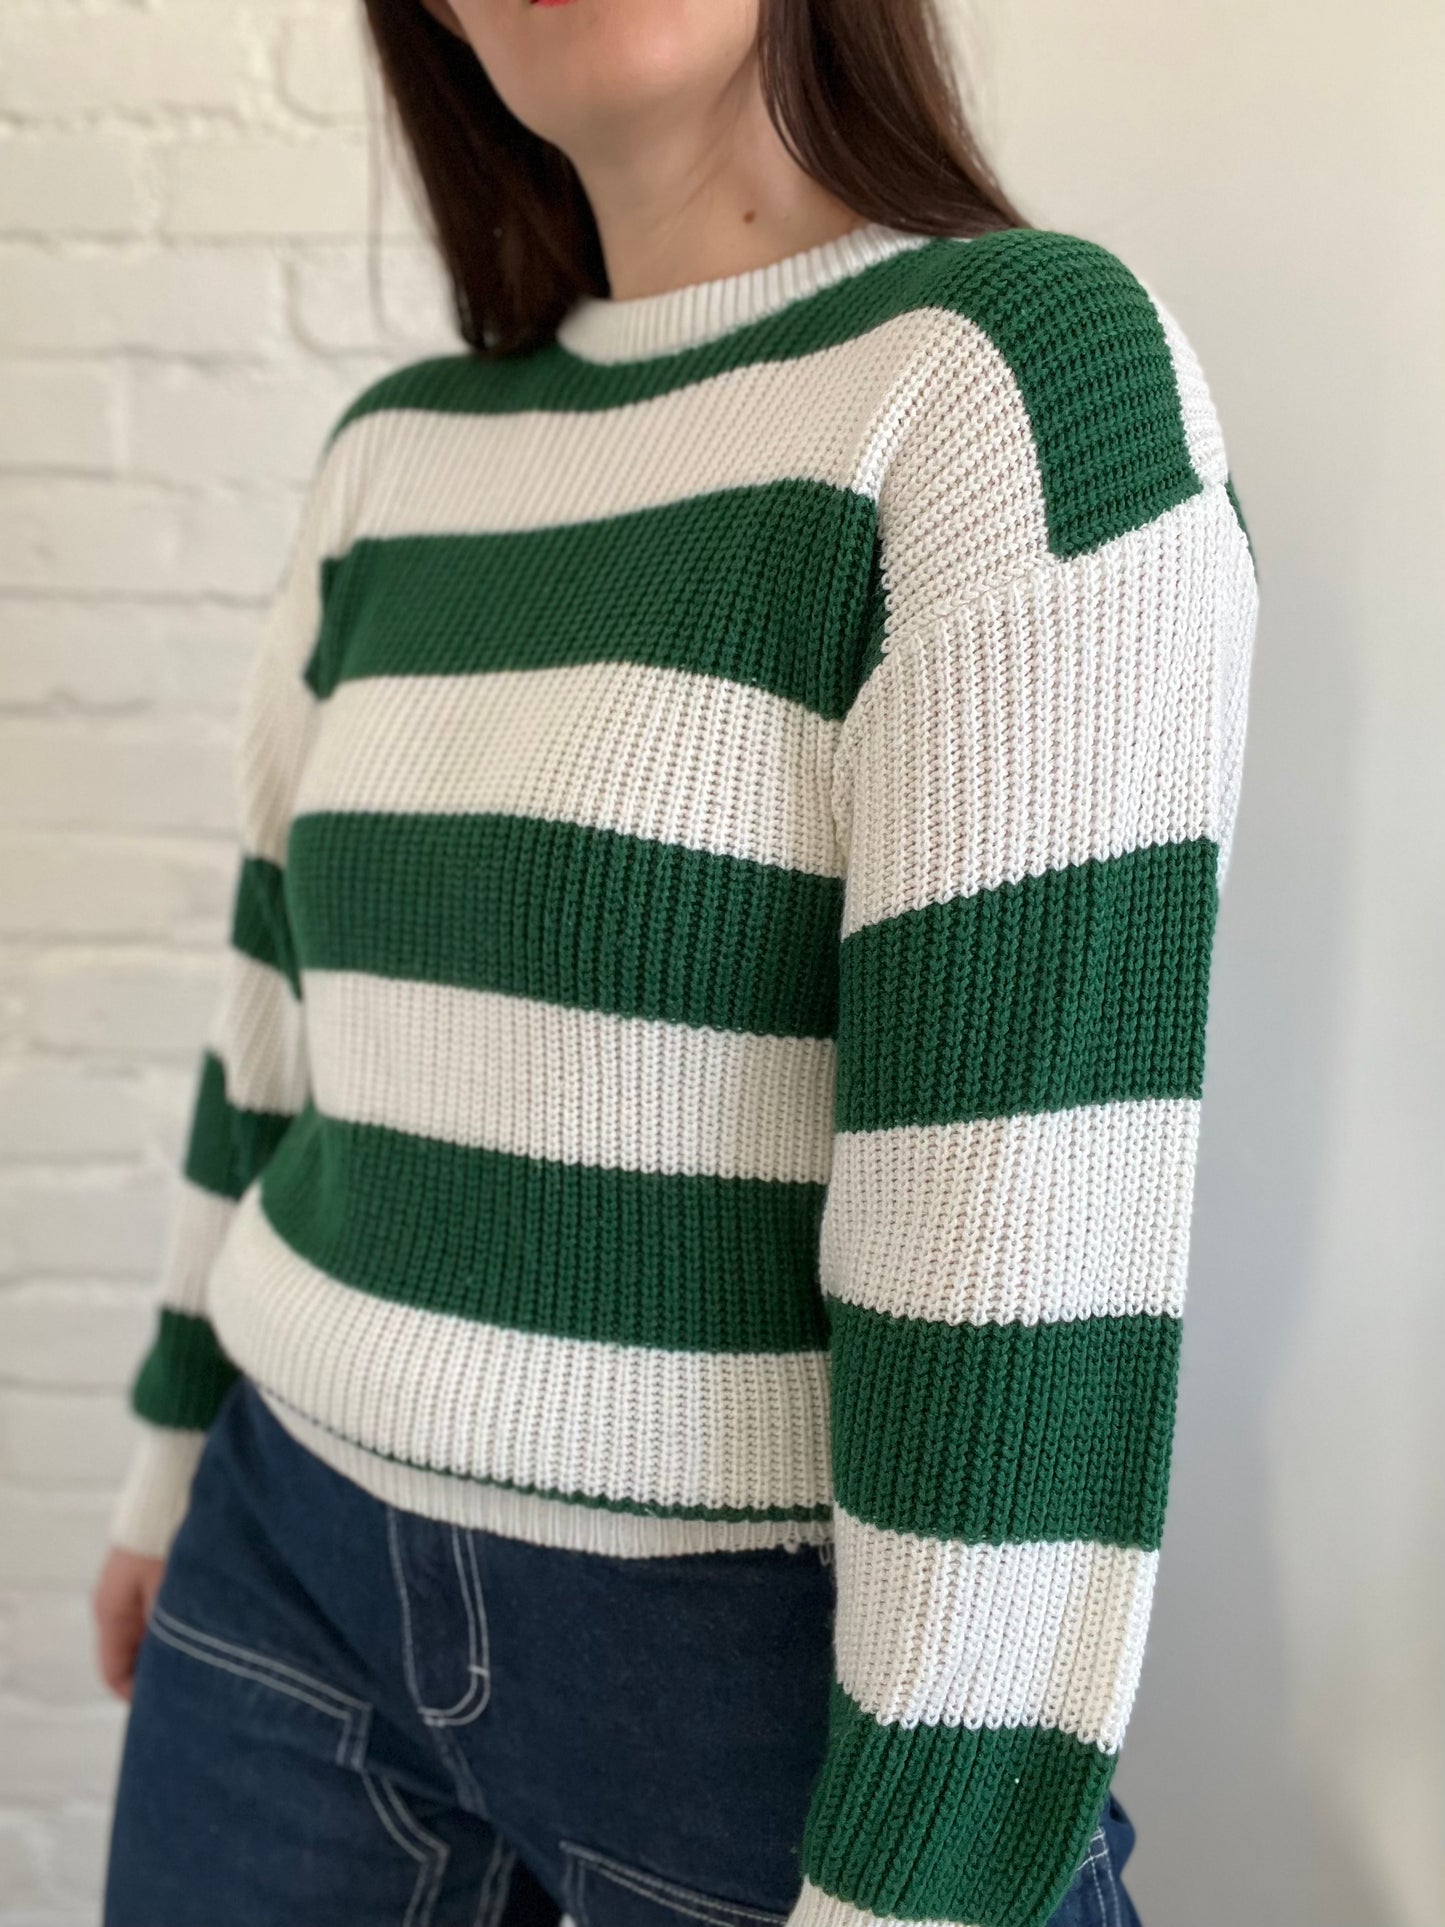 Green & White Striped Sweater - M